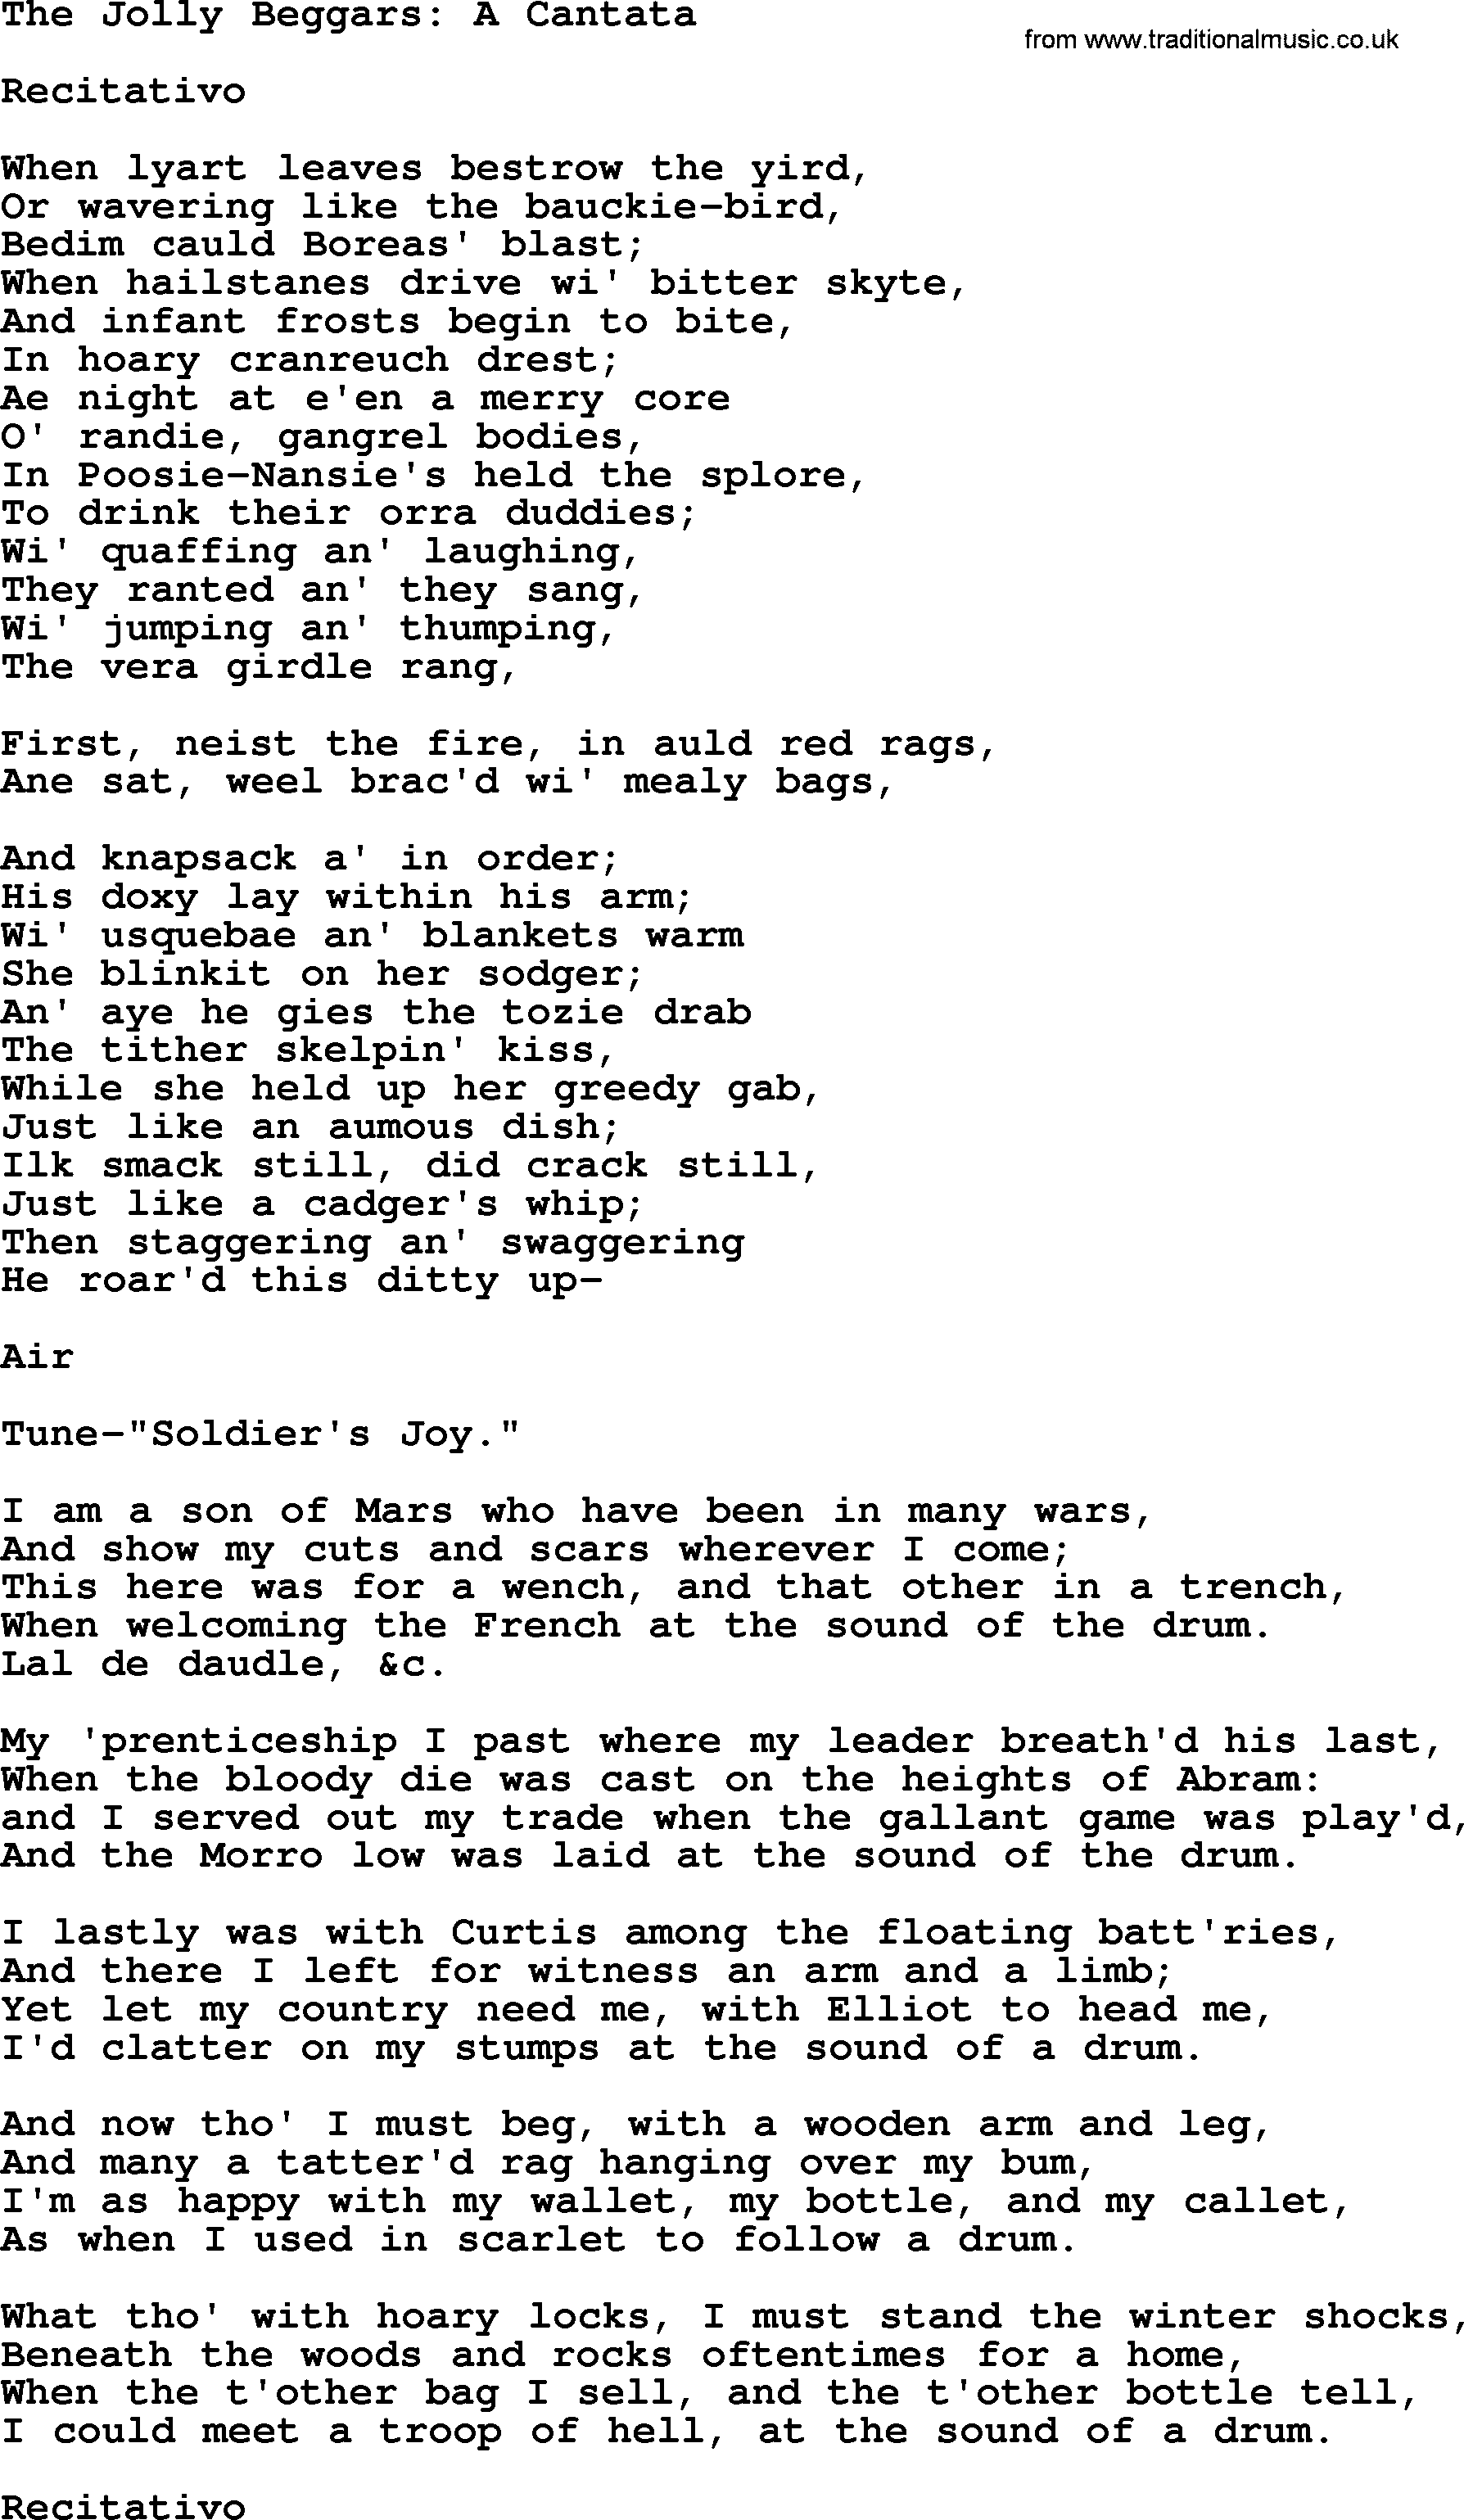 Robert Burns Songs & Lyrics: The Jolly Beggars A Cantata